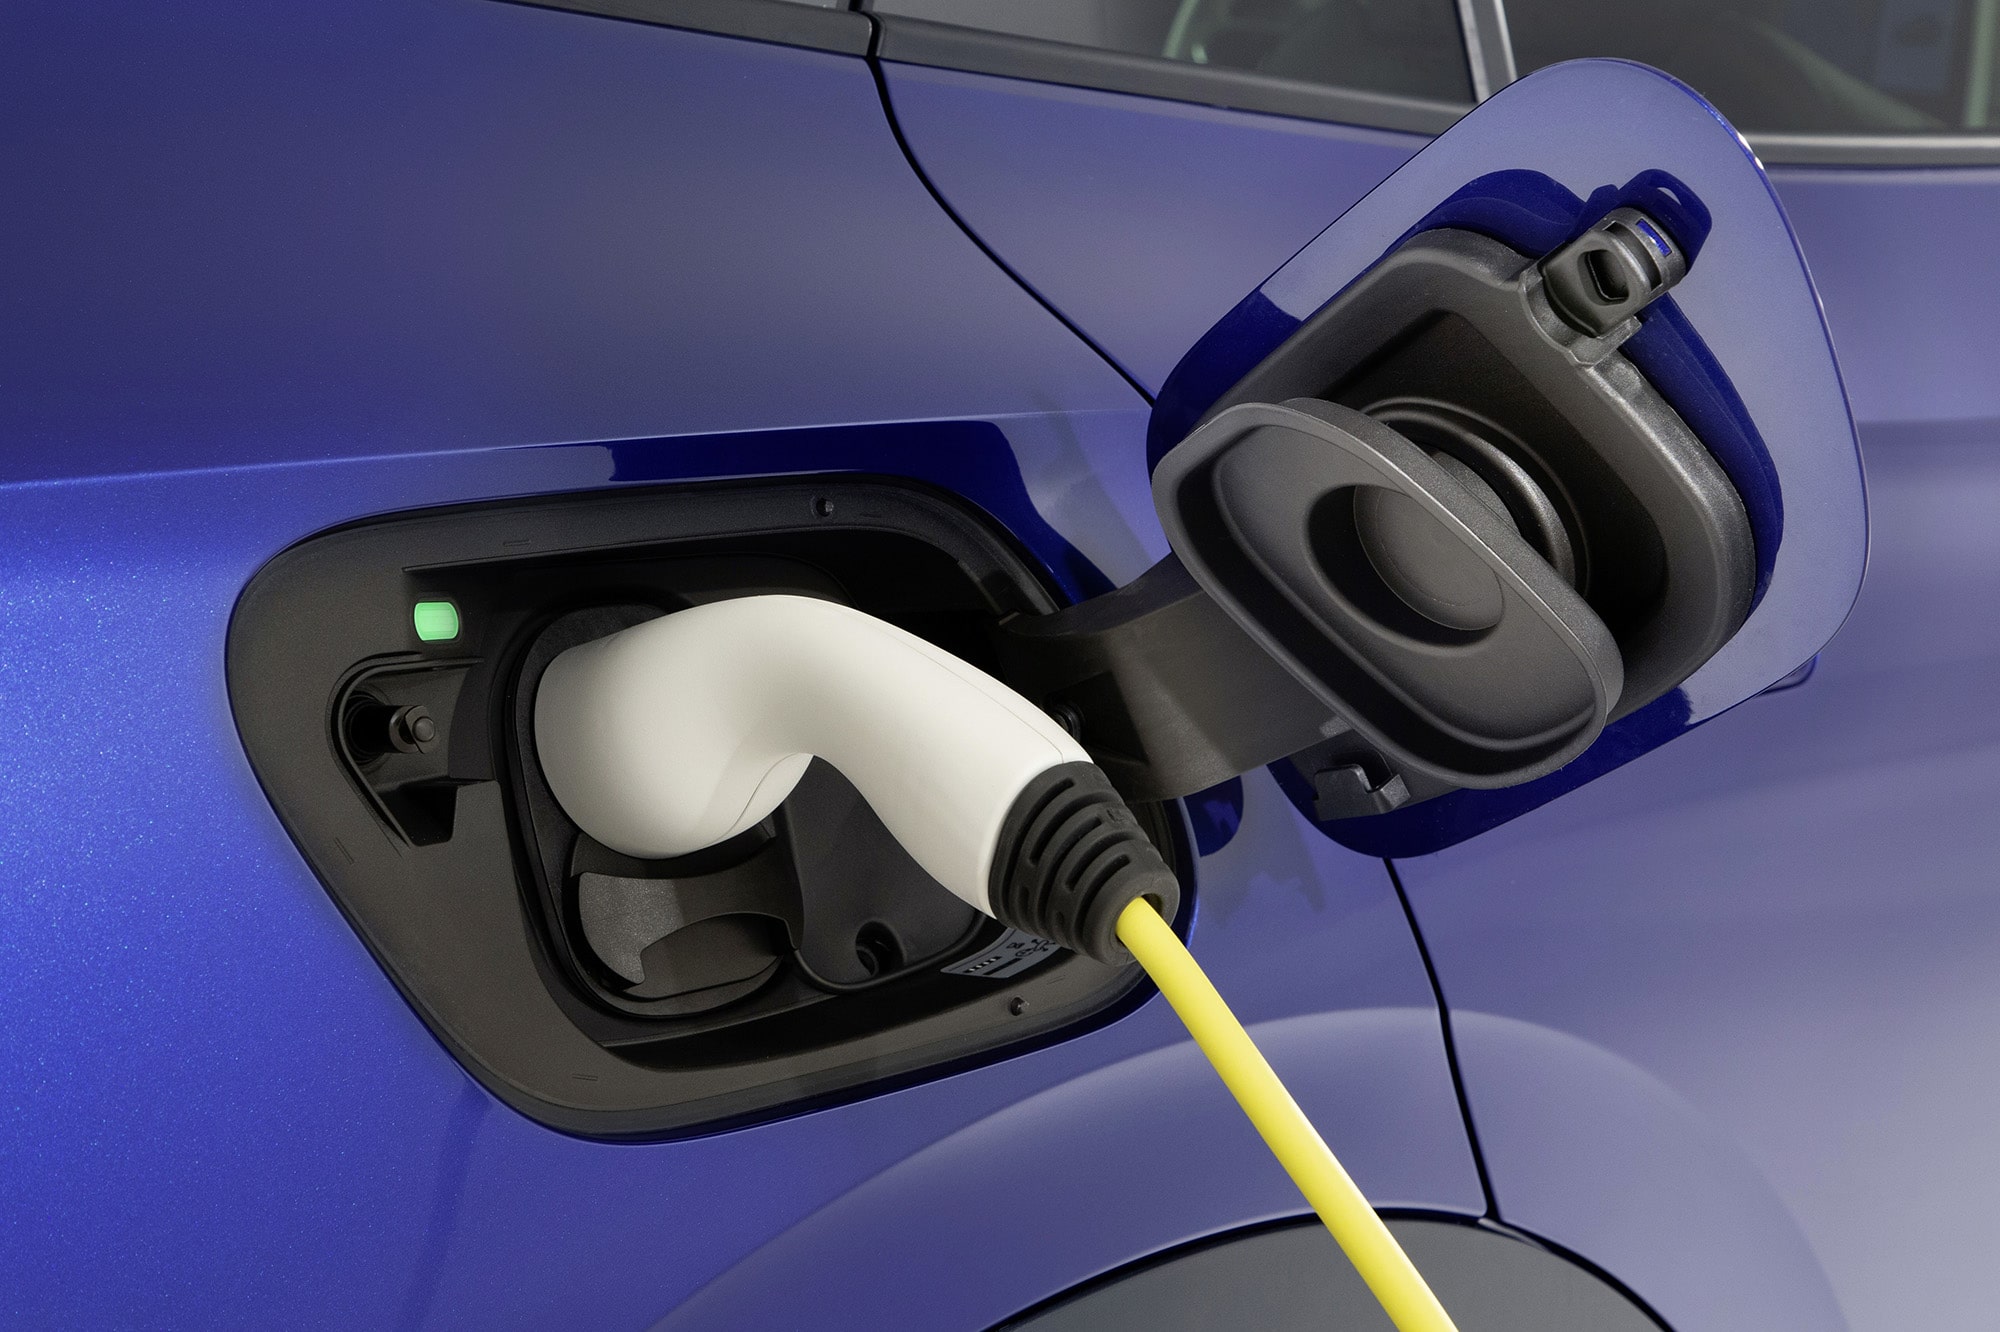 Vw Explains Electric Vehicle Charging Basics The Ev Report